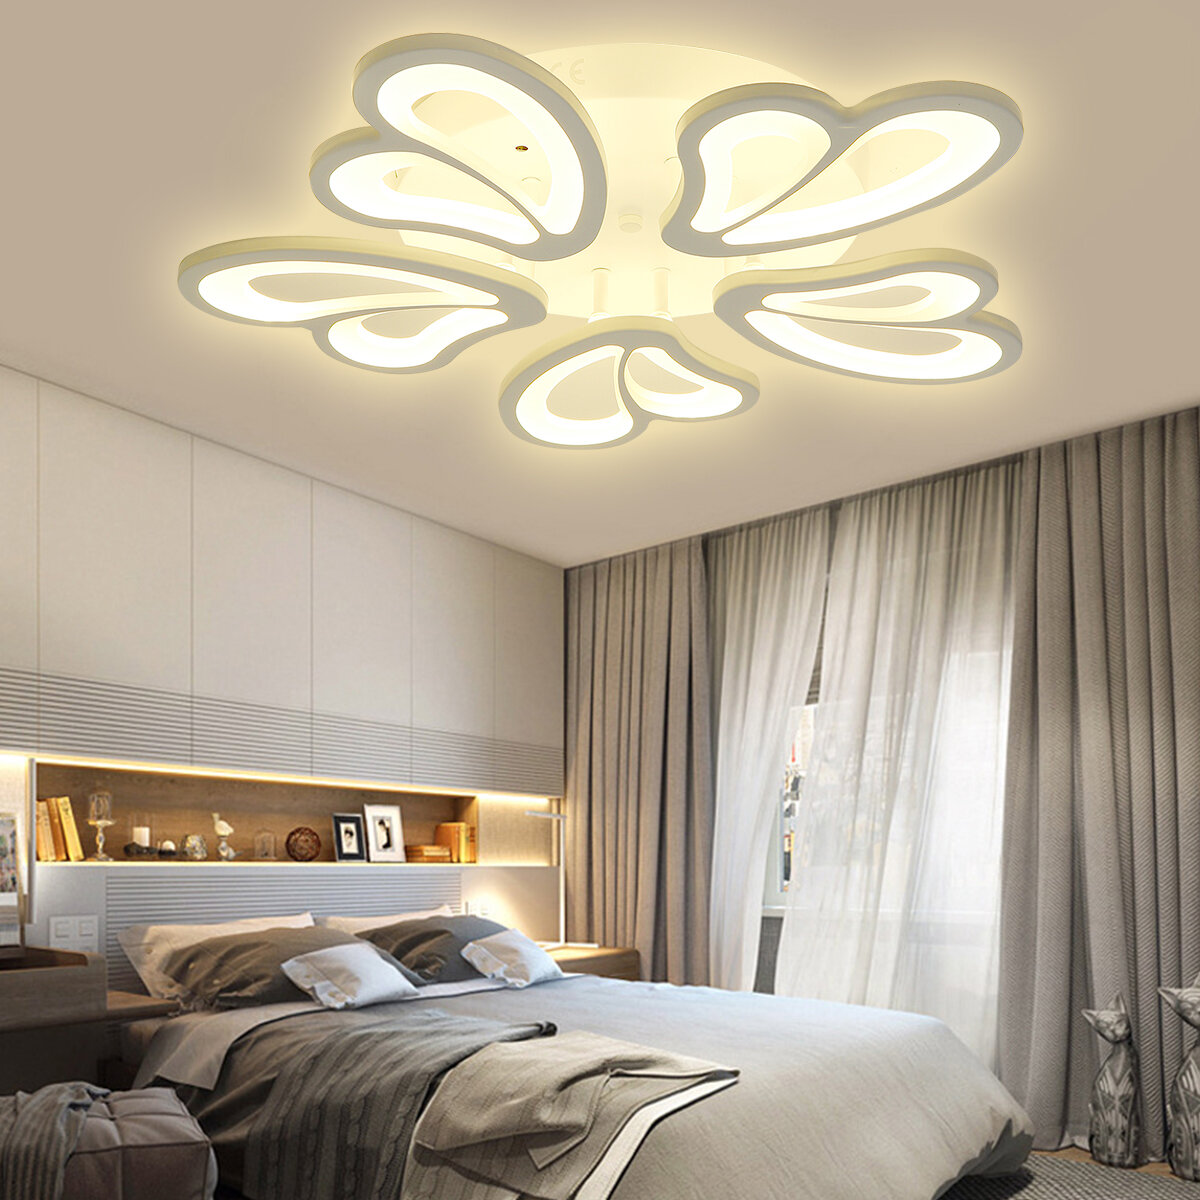 5 Heads Modern Ceiling Lamp+Remote Control AC 110-220V Living Room Bedroom Study Light